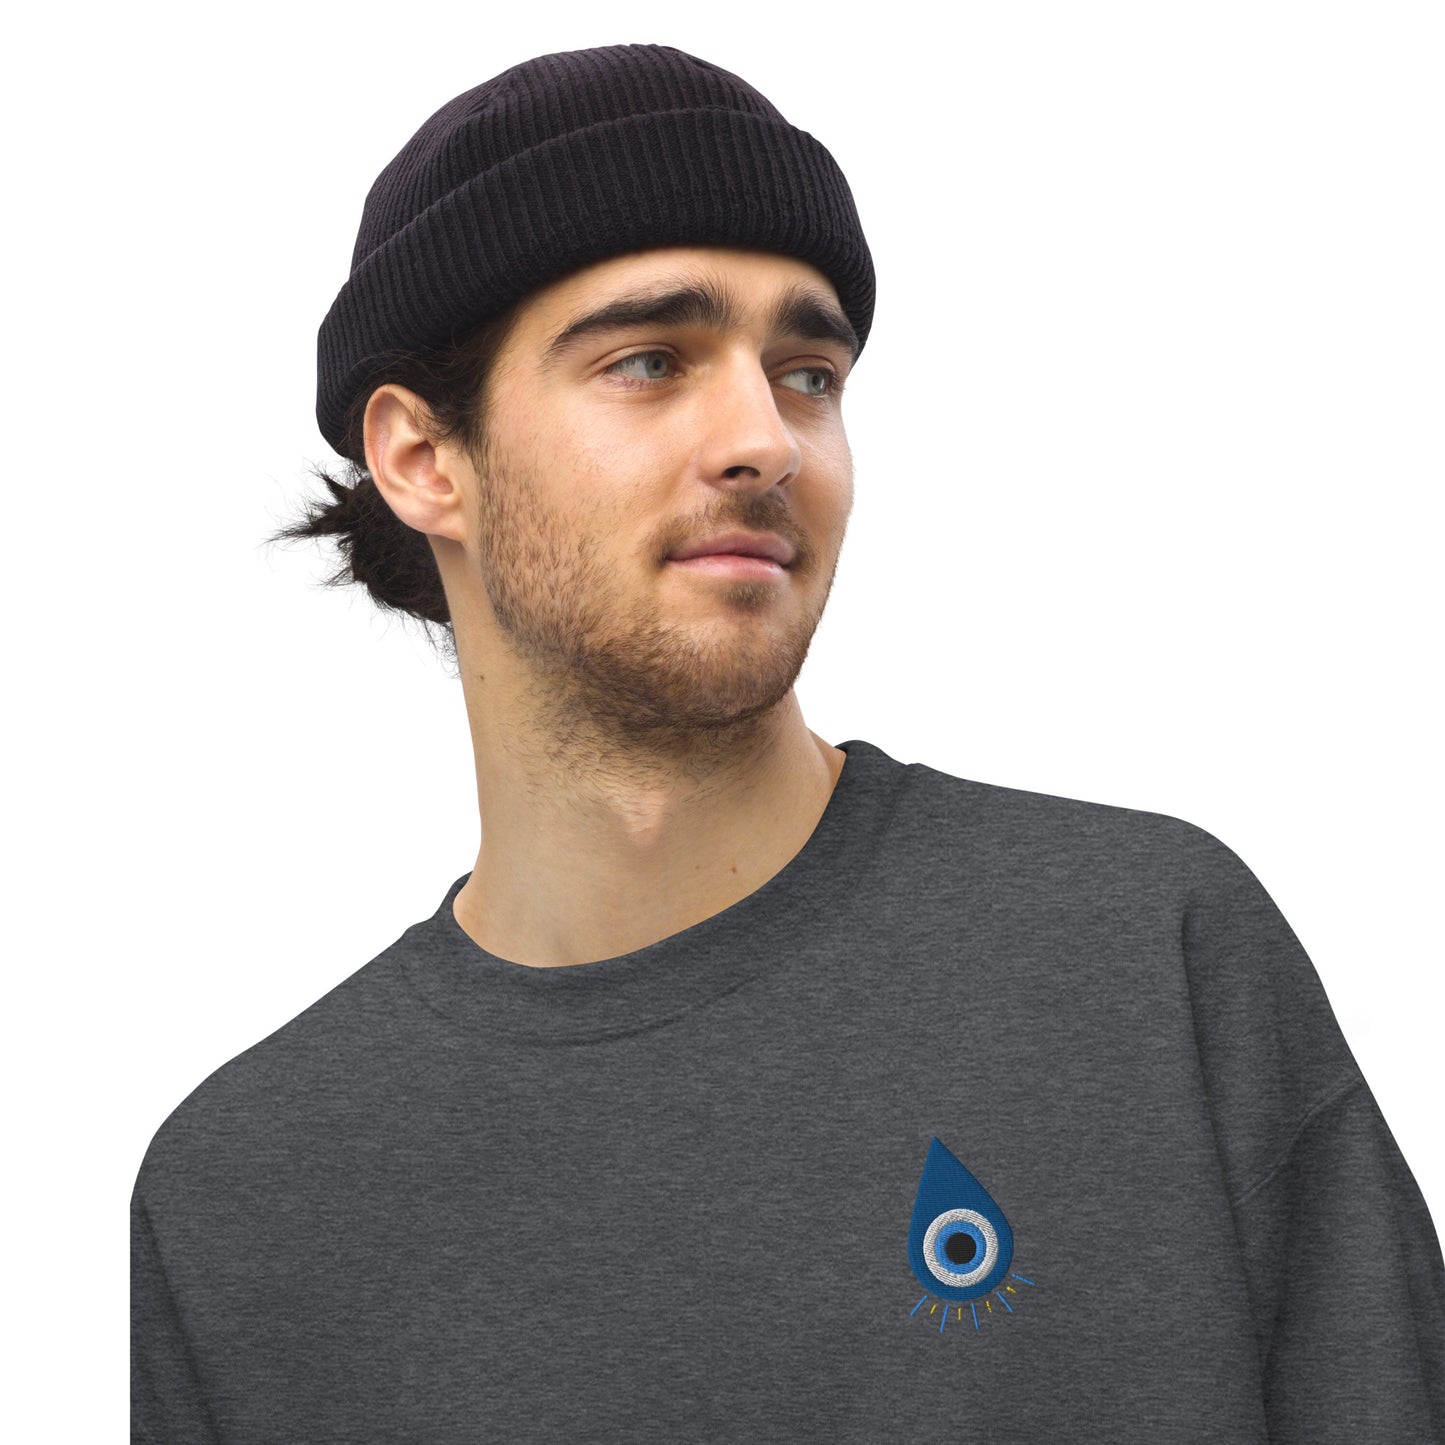 Mal Ojo Stitched Unisex Sweatshirt